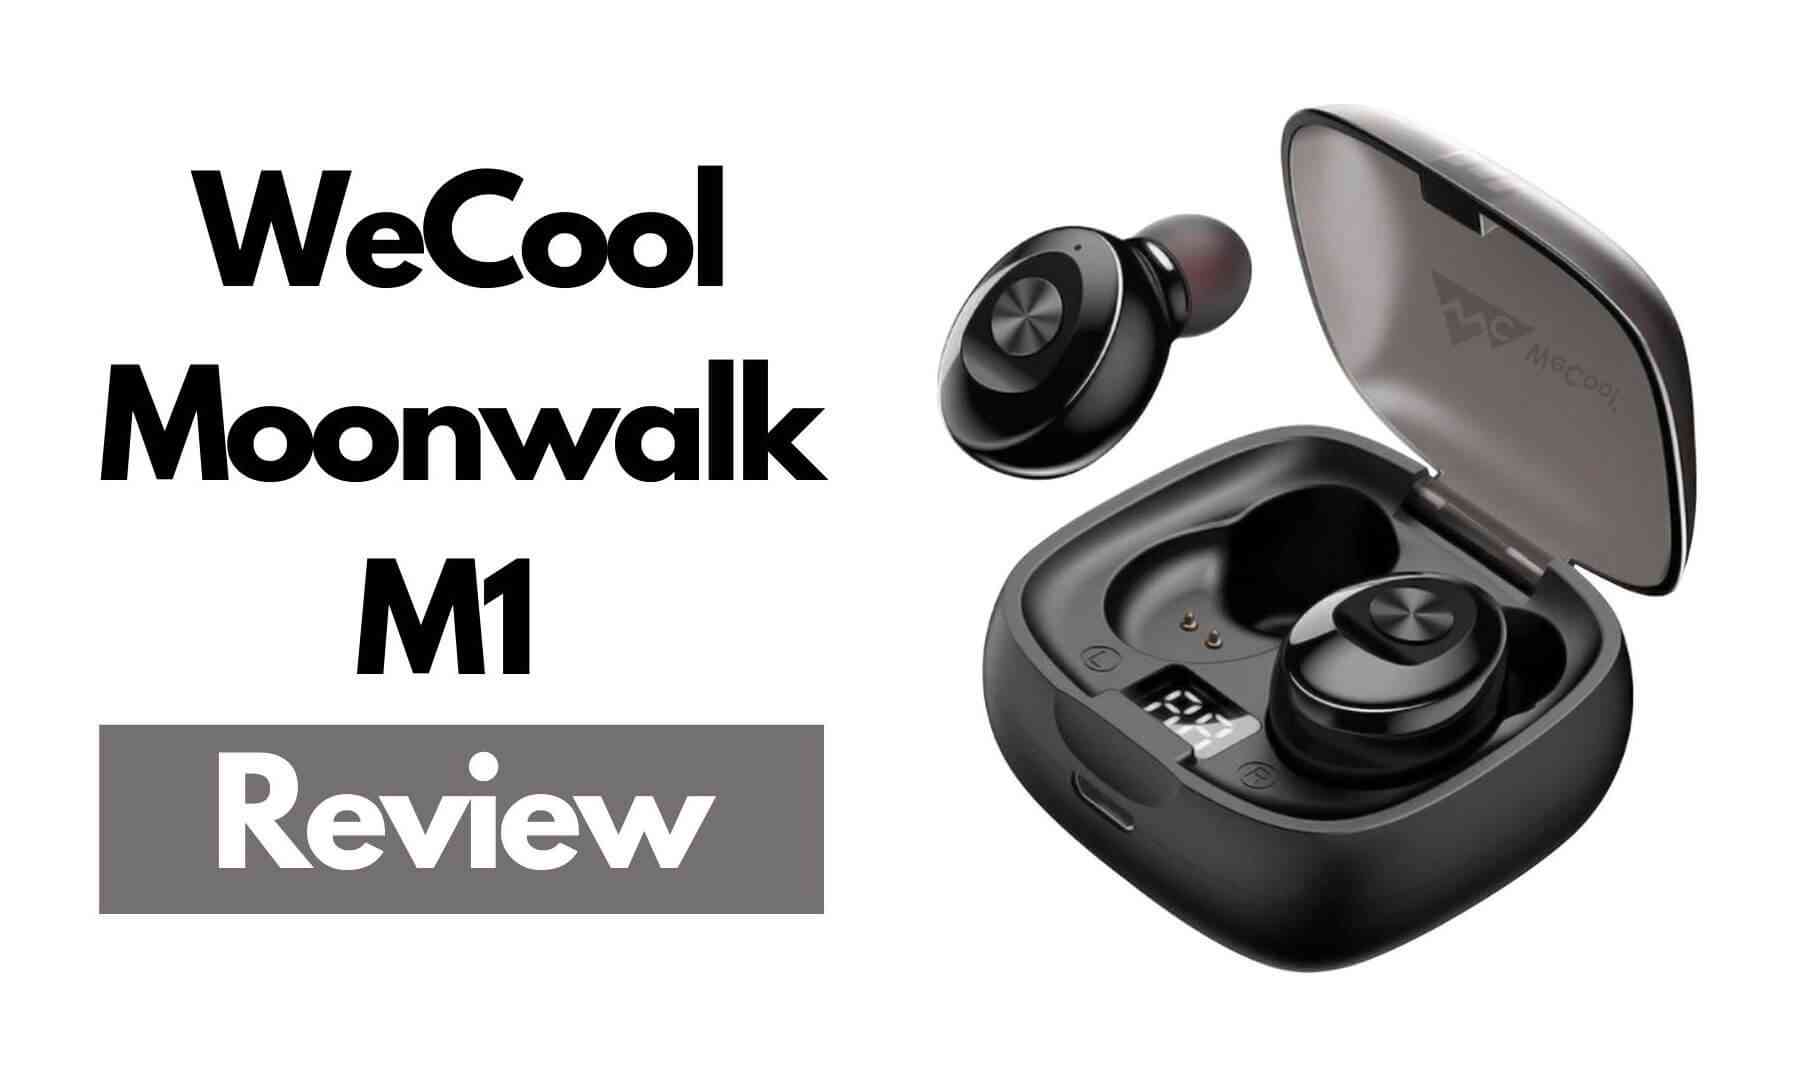 WeCool Moonwalk M1 Review